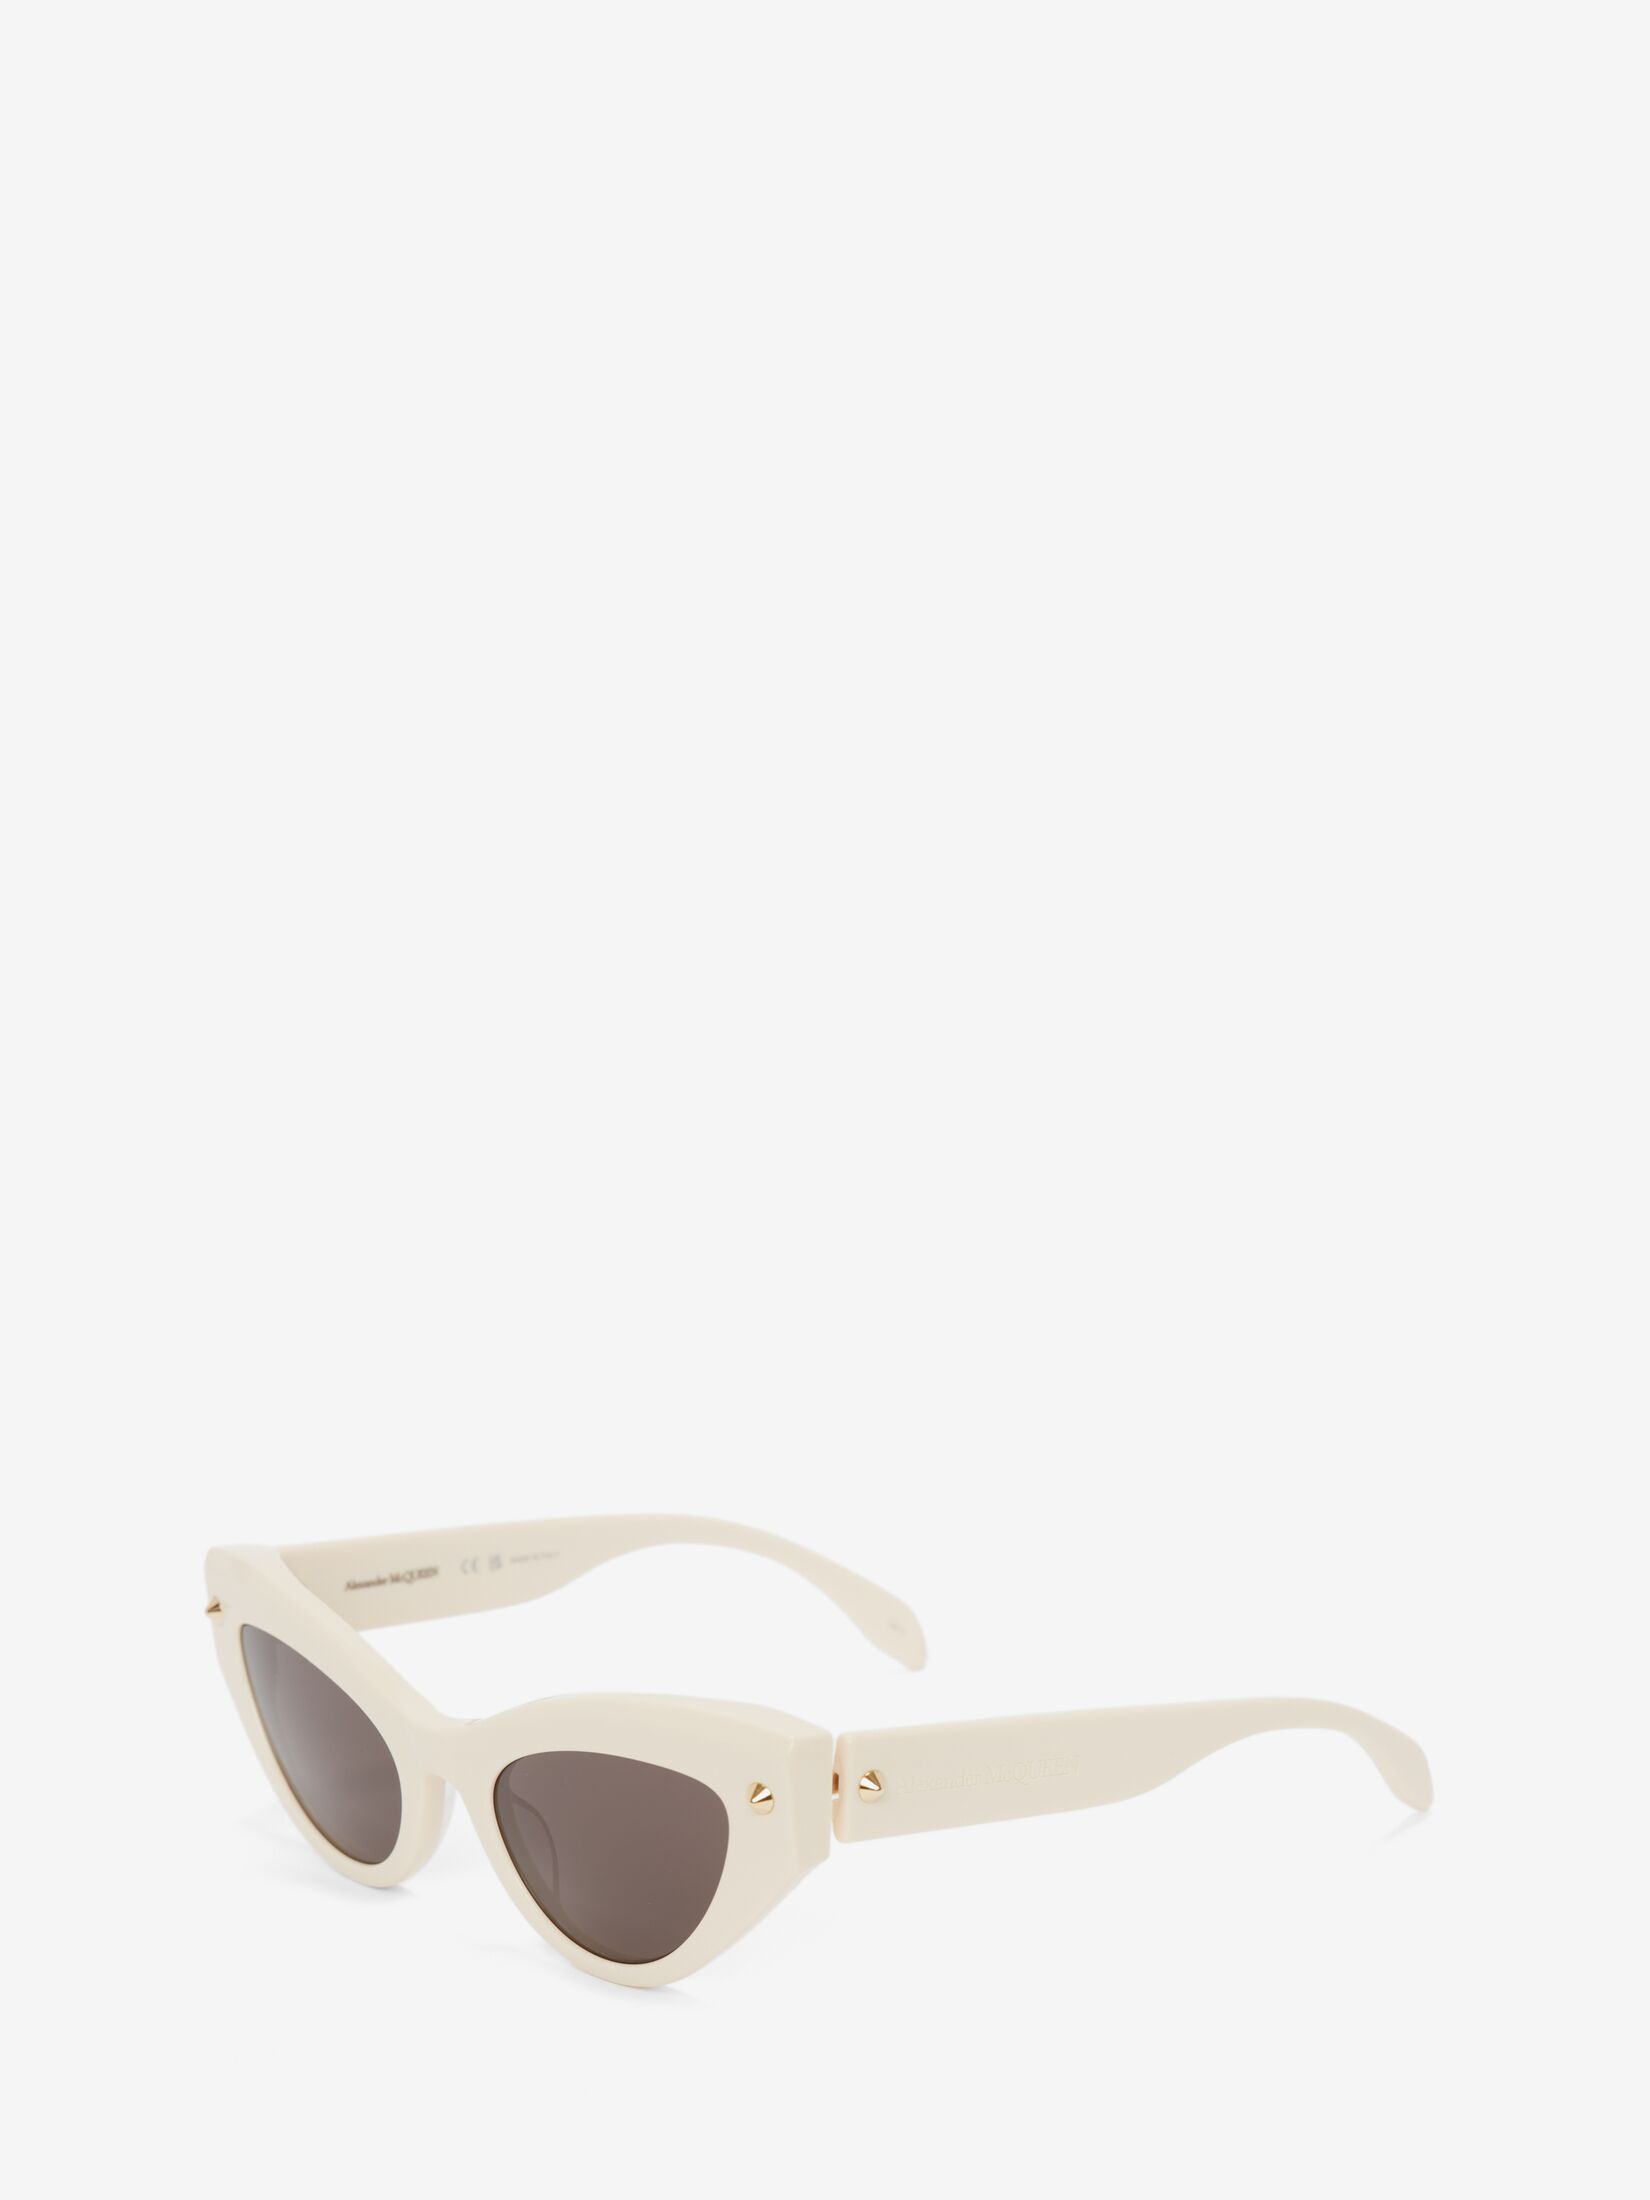 Spike Studs Cat-Eye Sunglasses